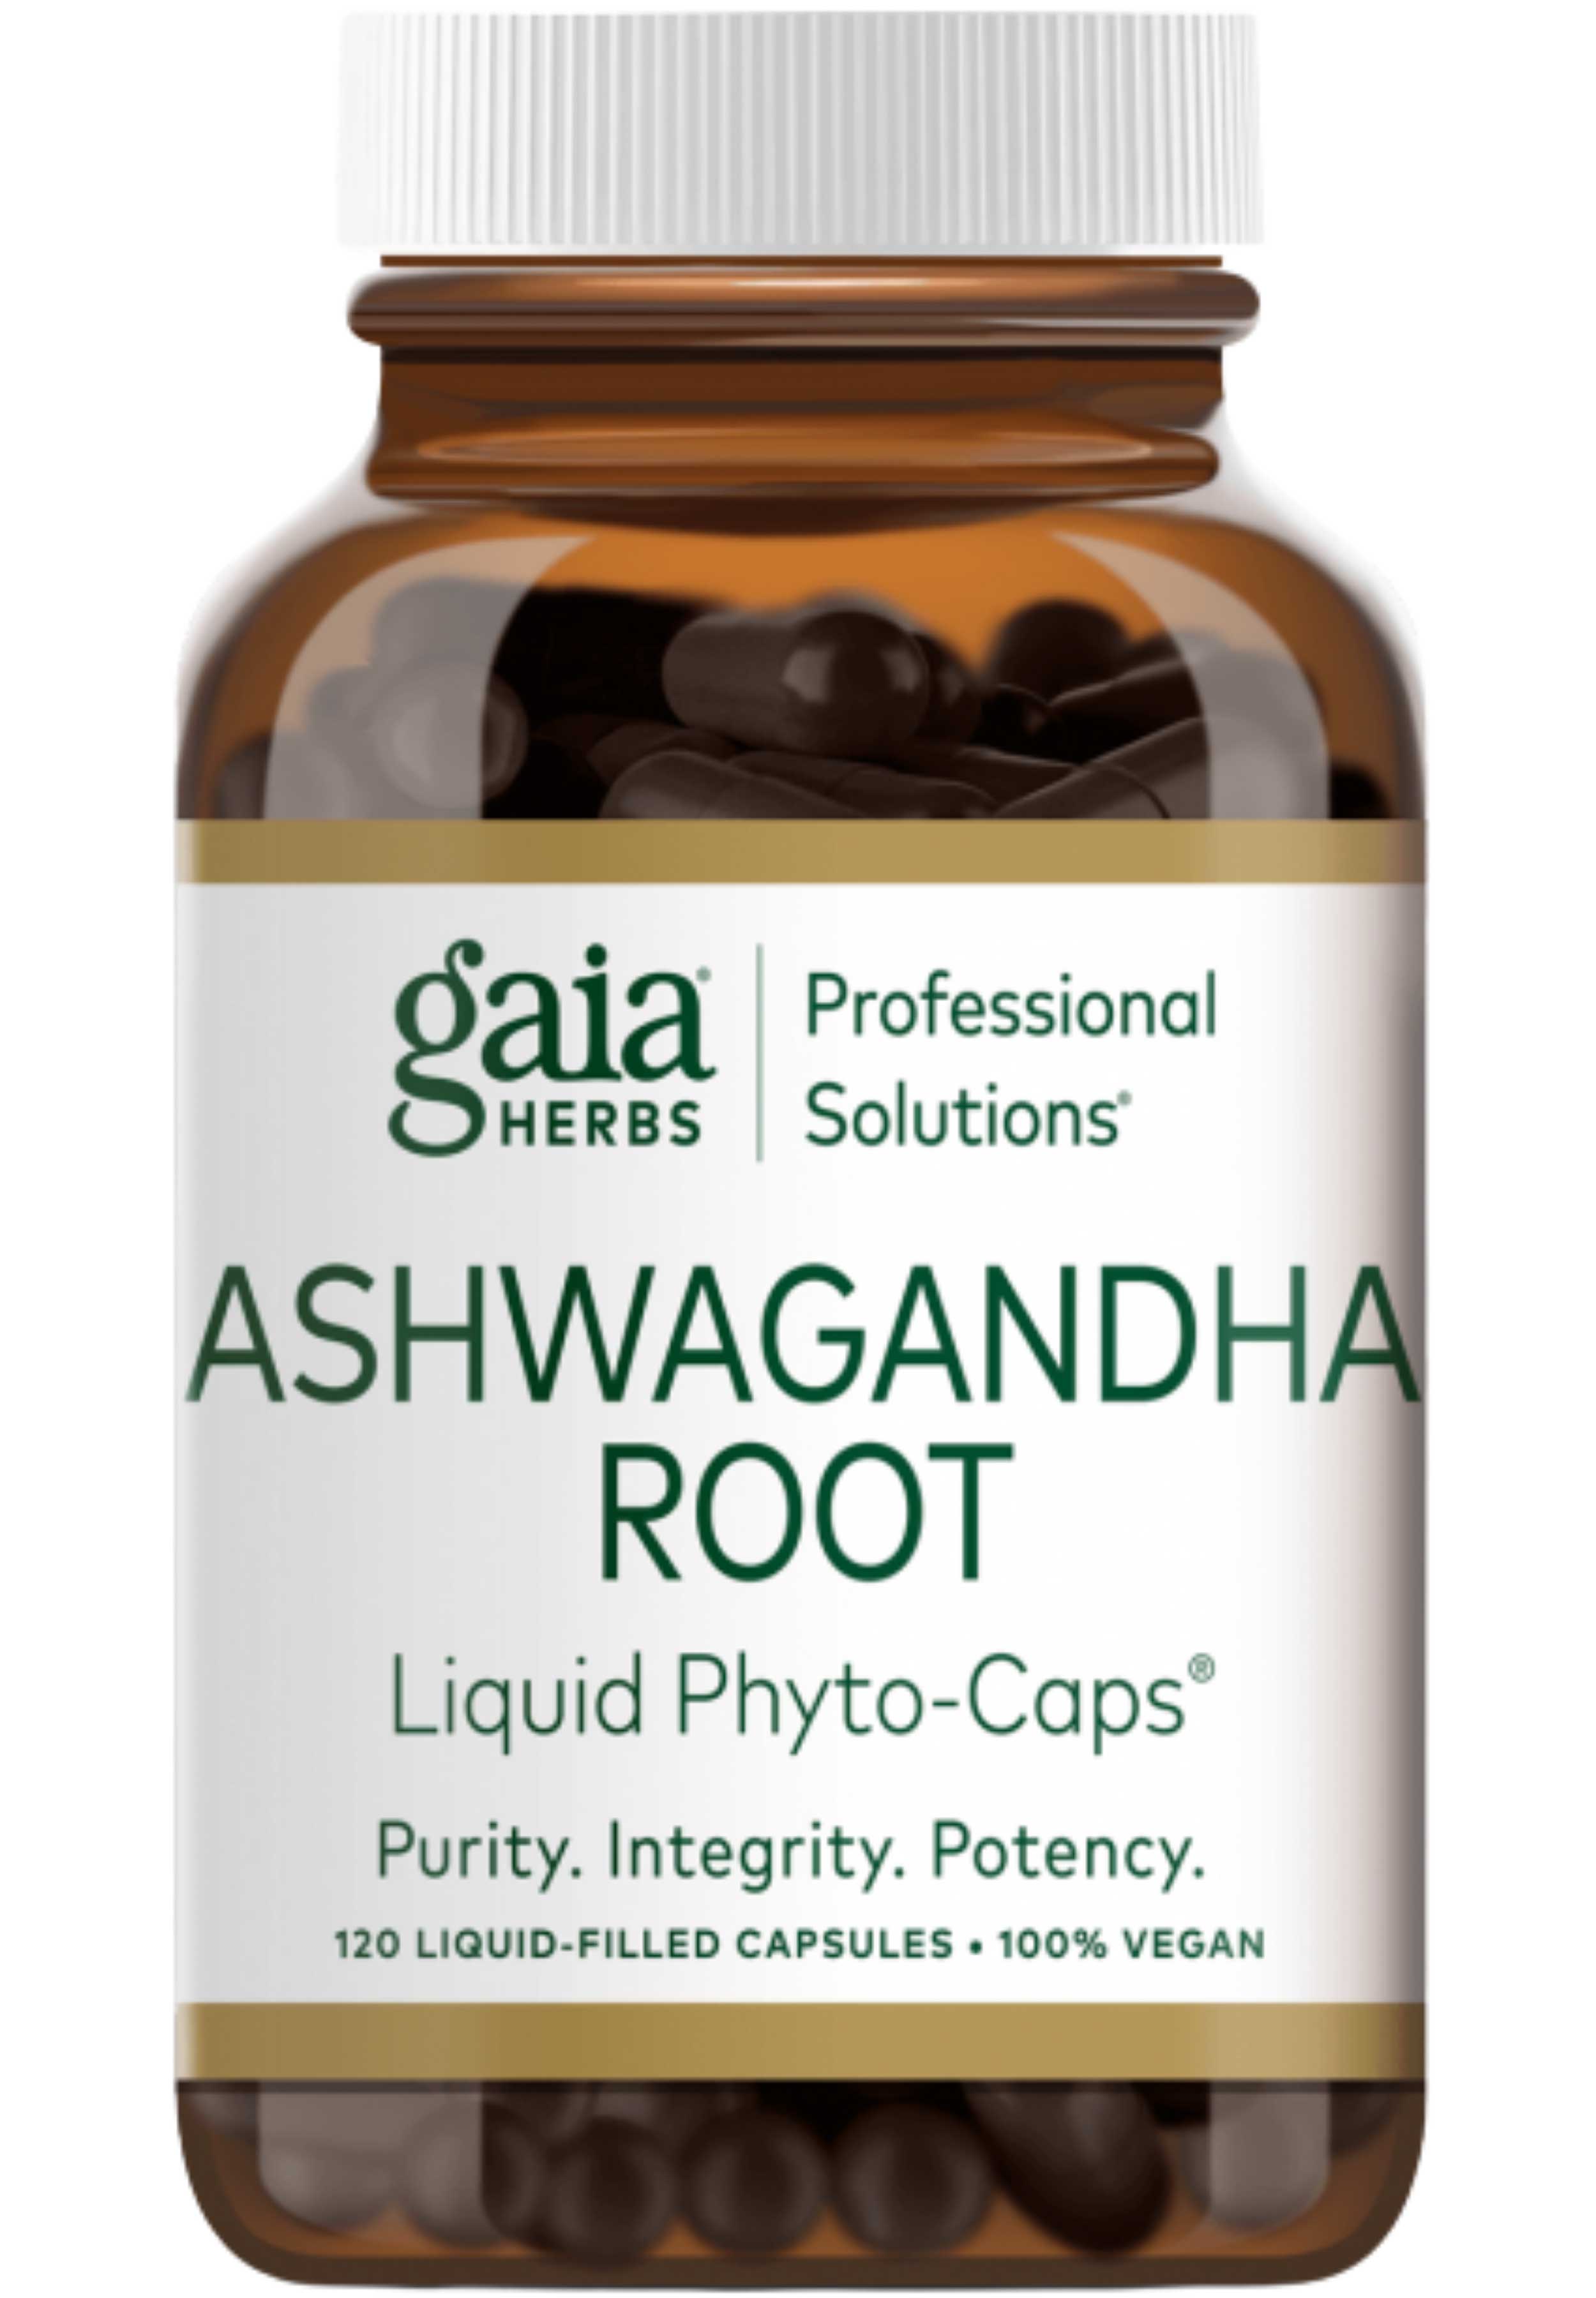 Gaia Herbs Professional Solutions Ashwagandha Root